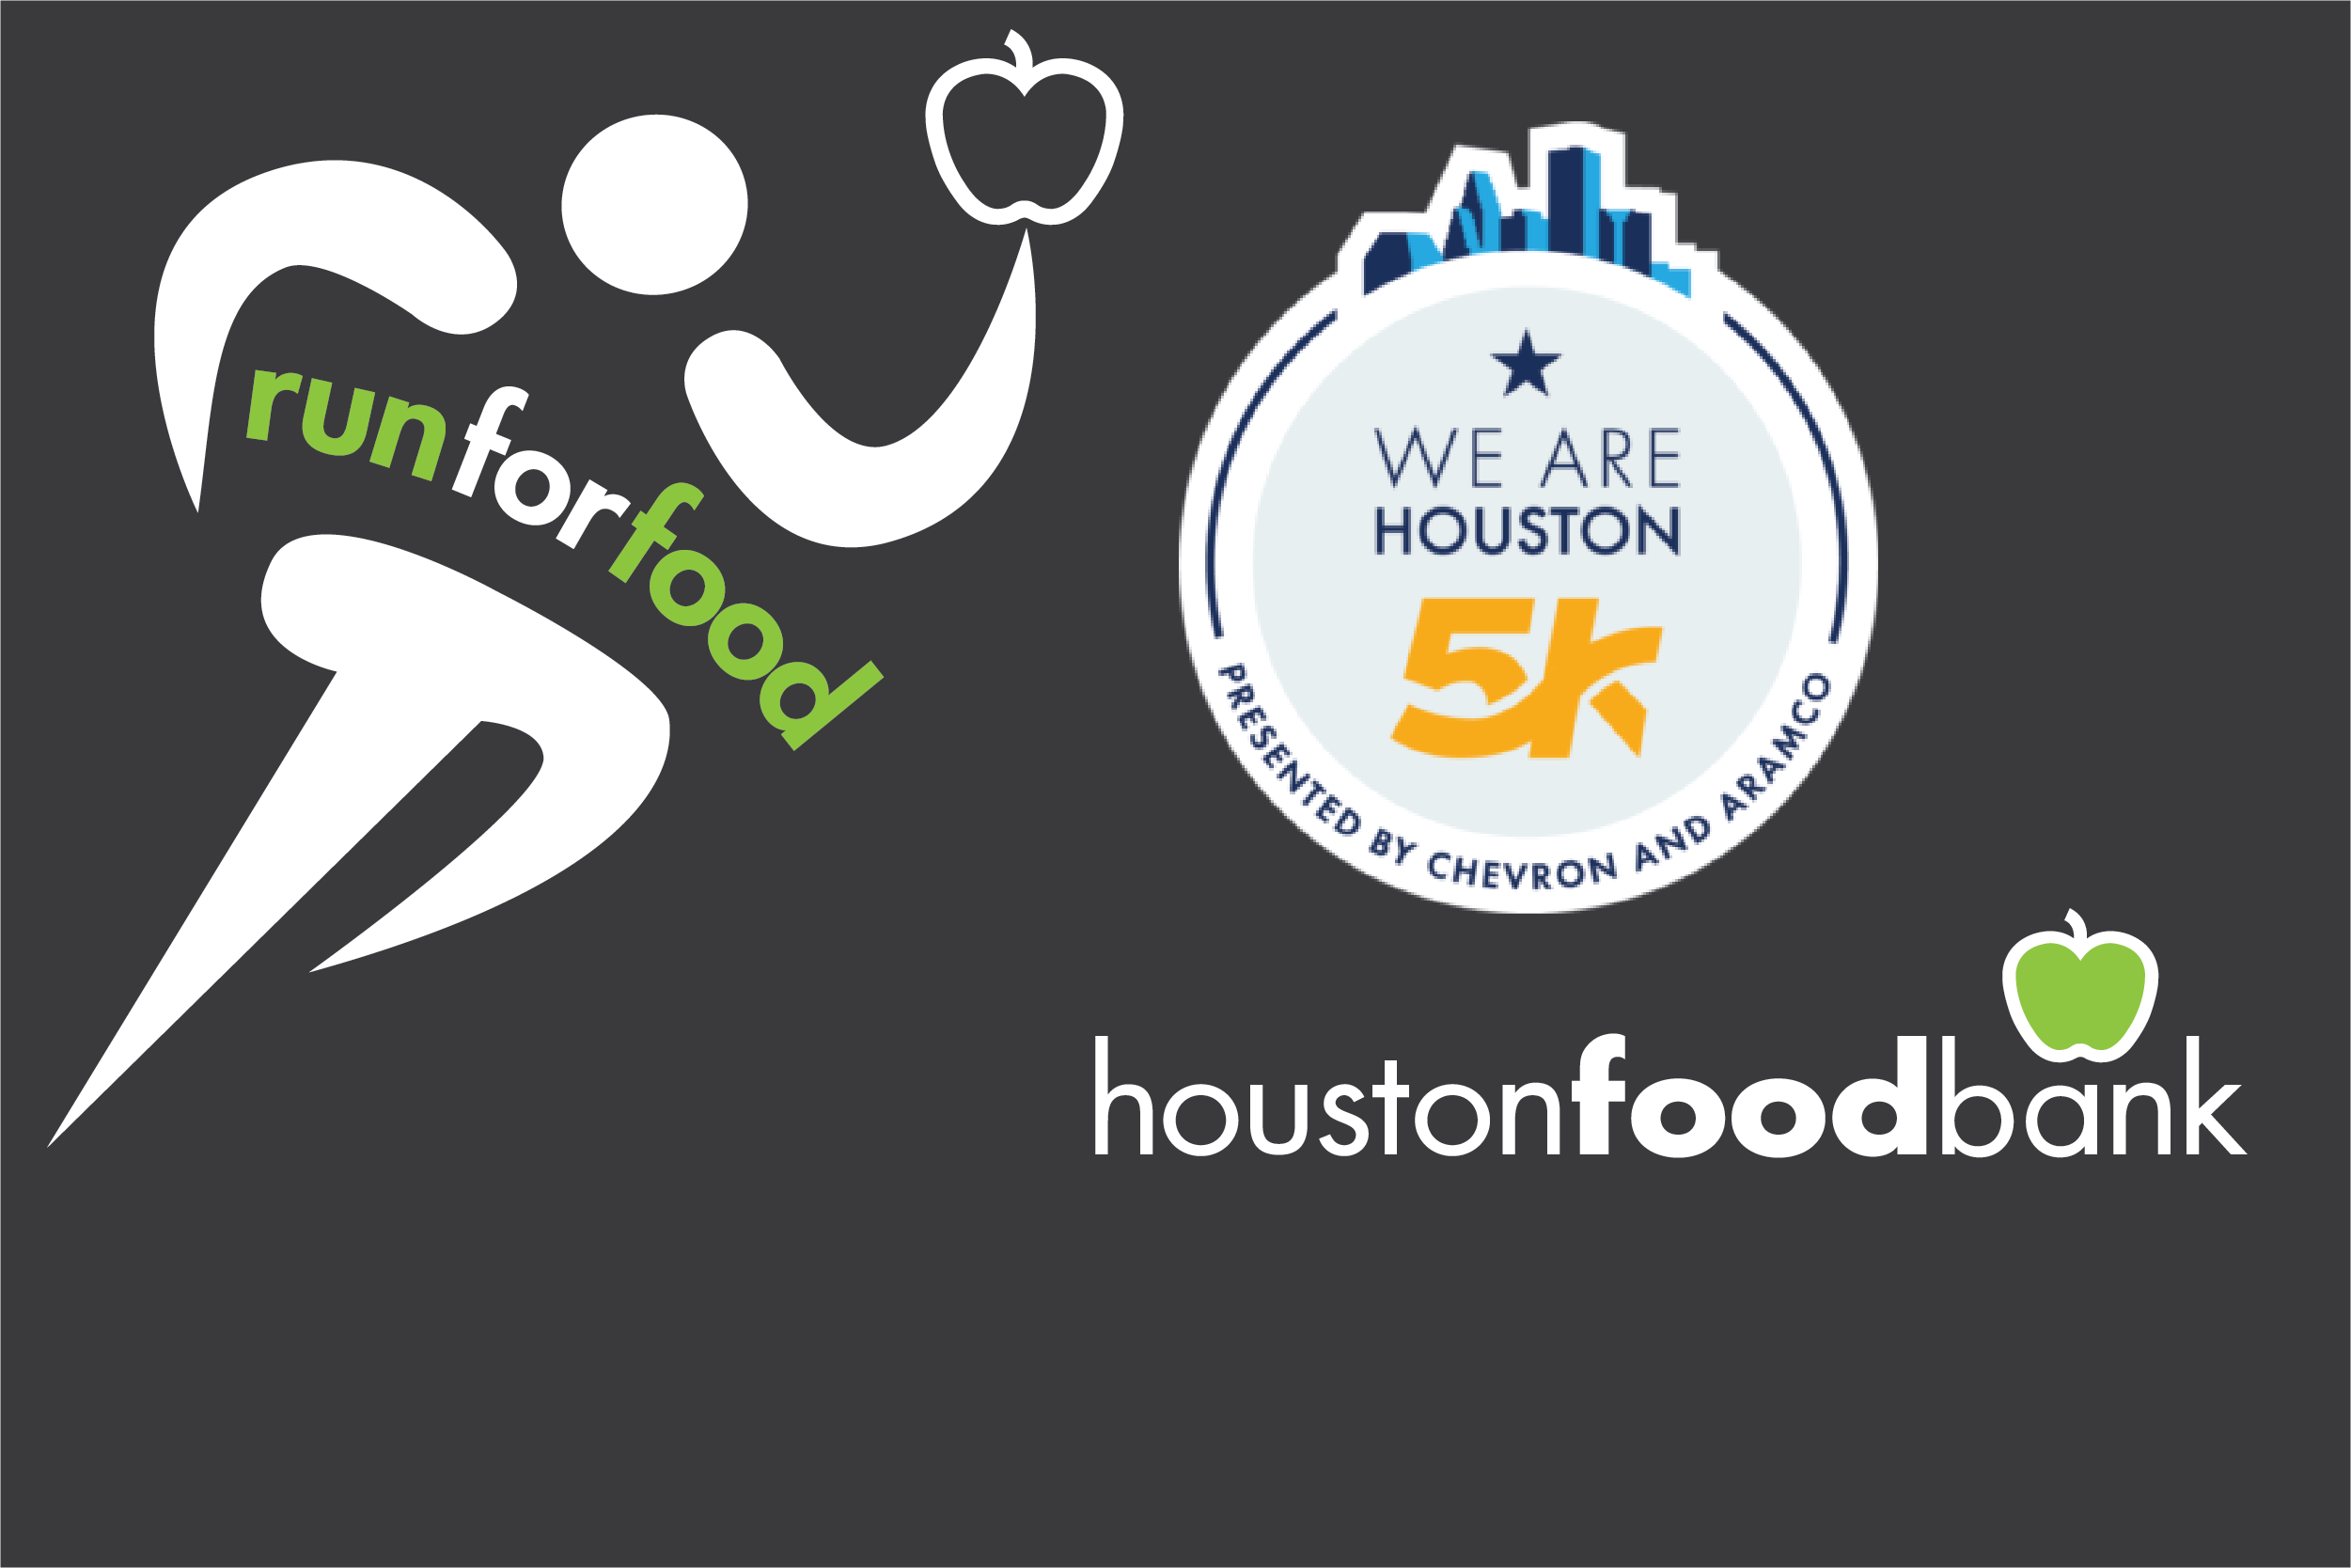 Marathon event in Houston